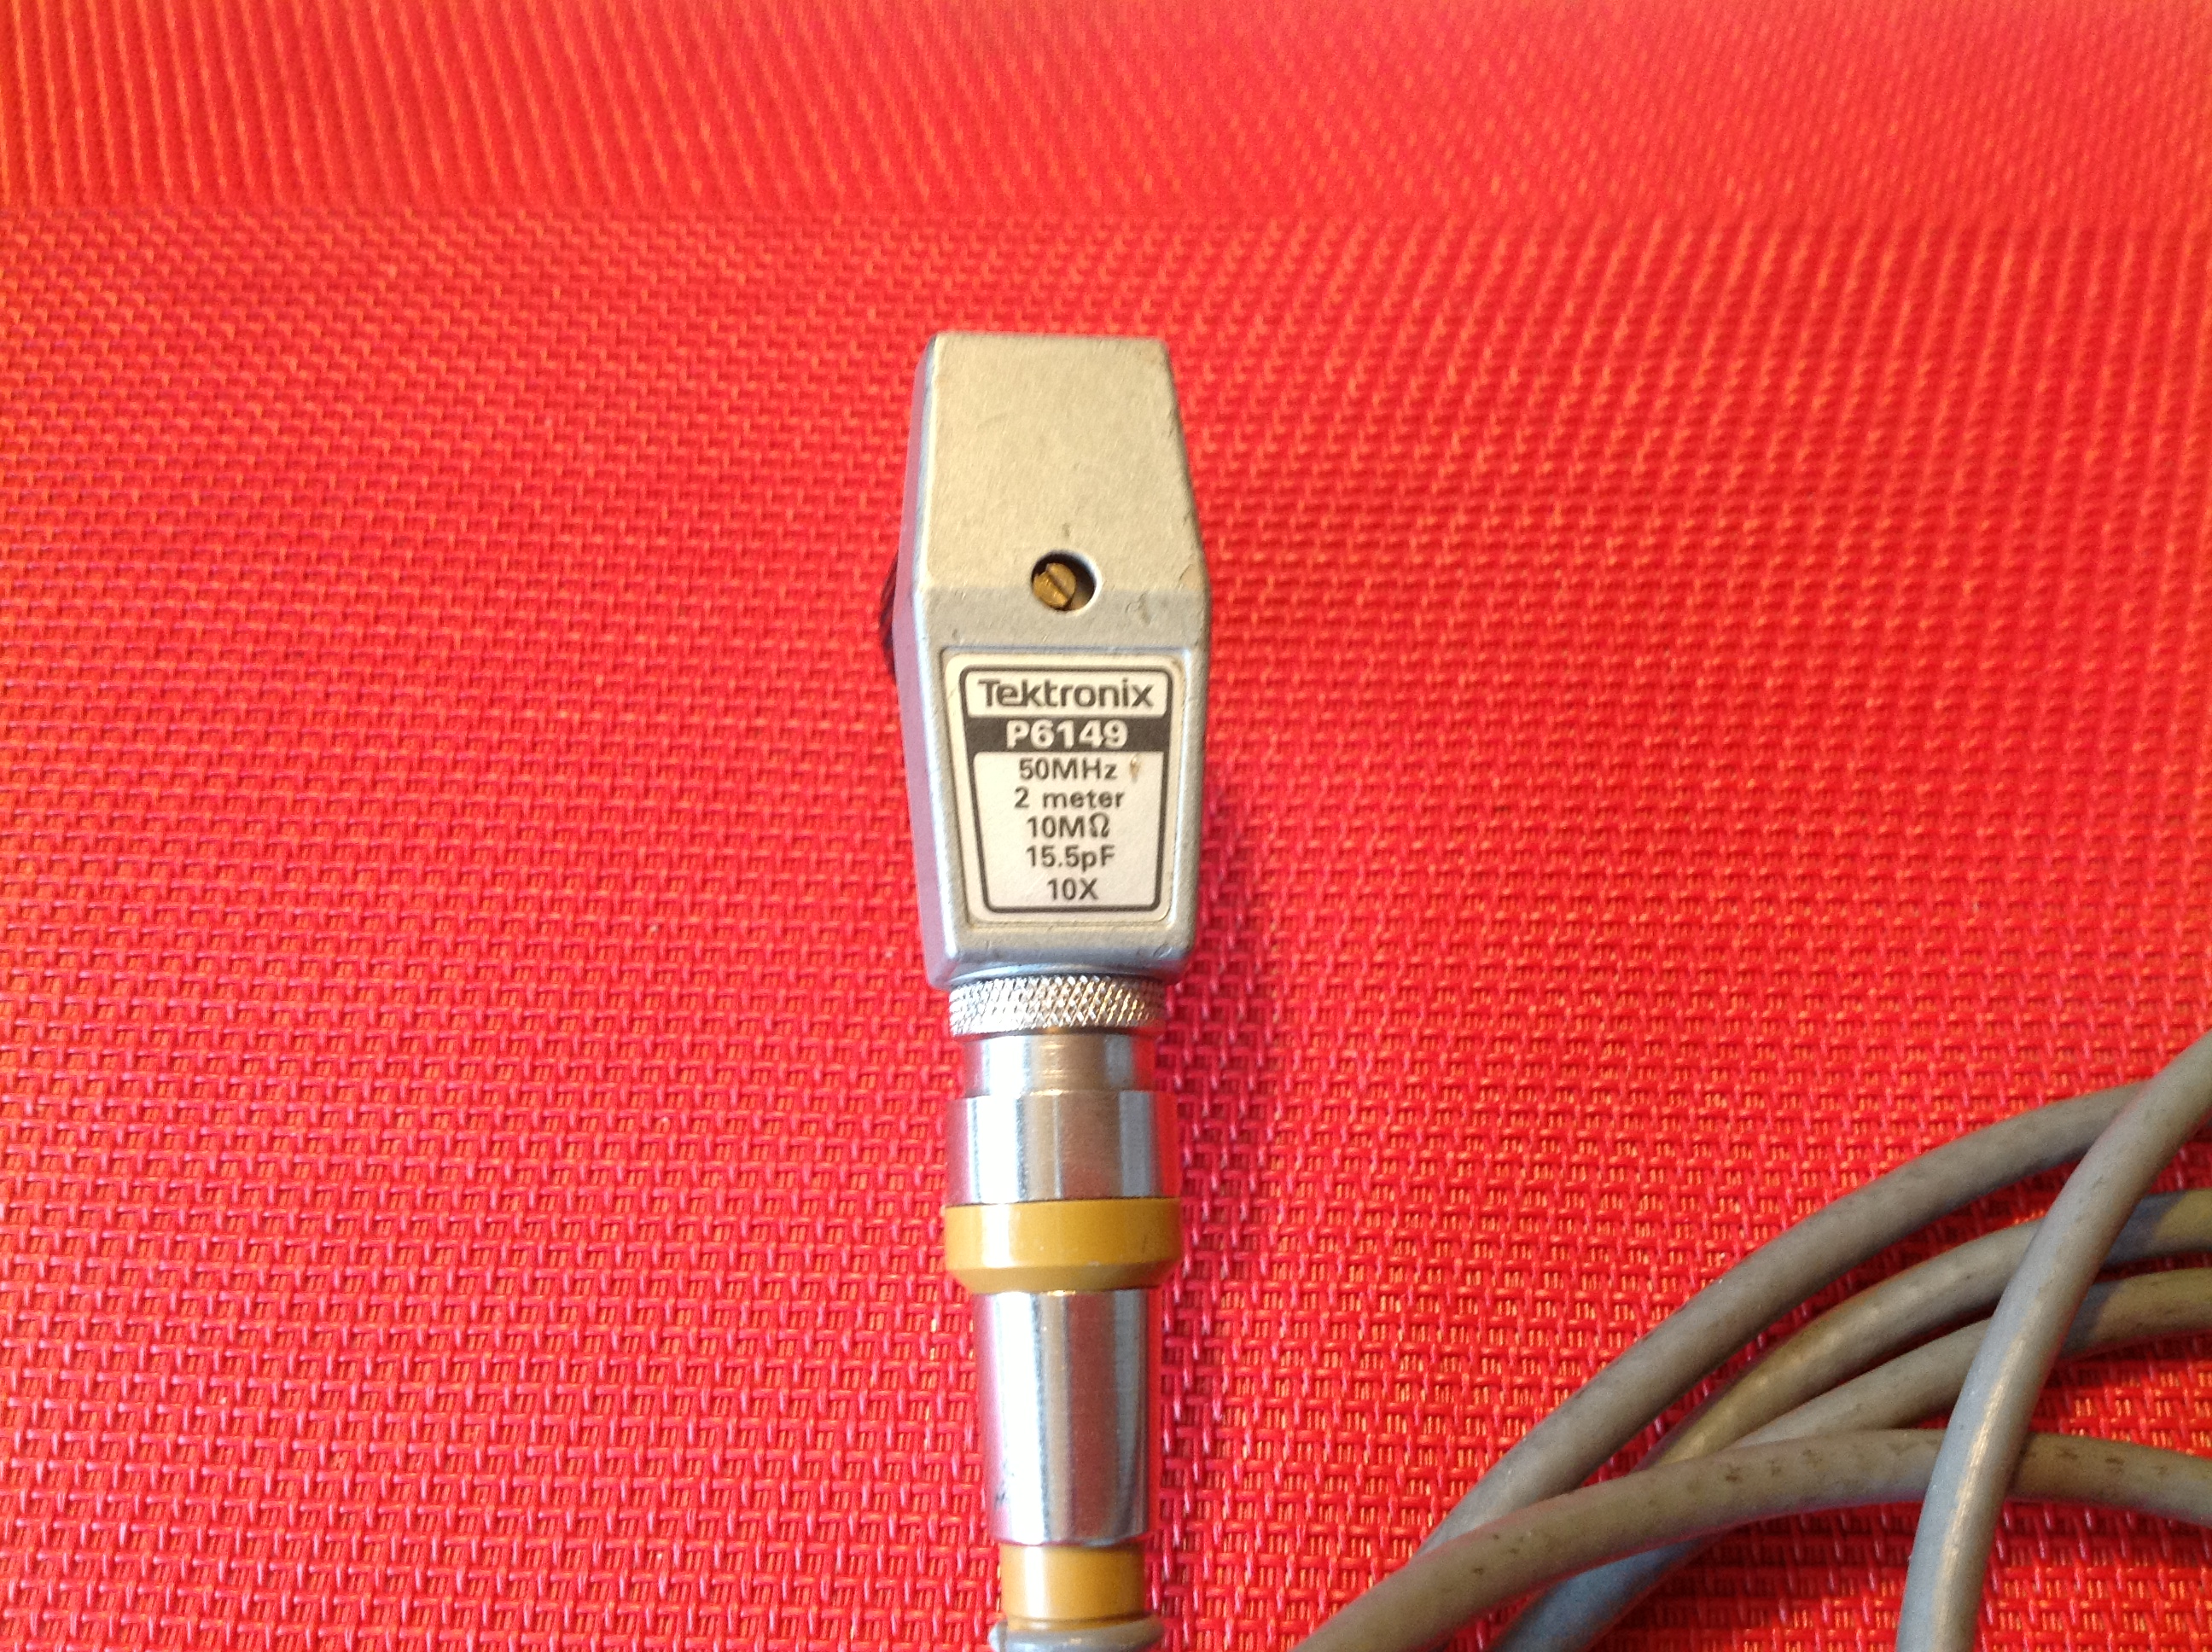 Sony Tektronix 314 Storage Oszilloscope